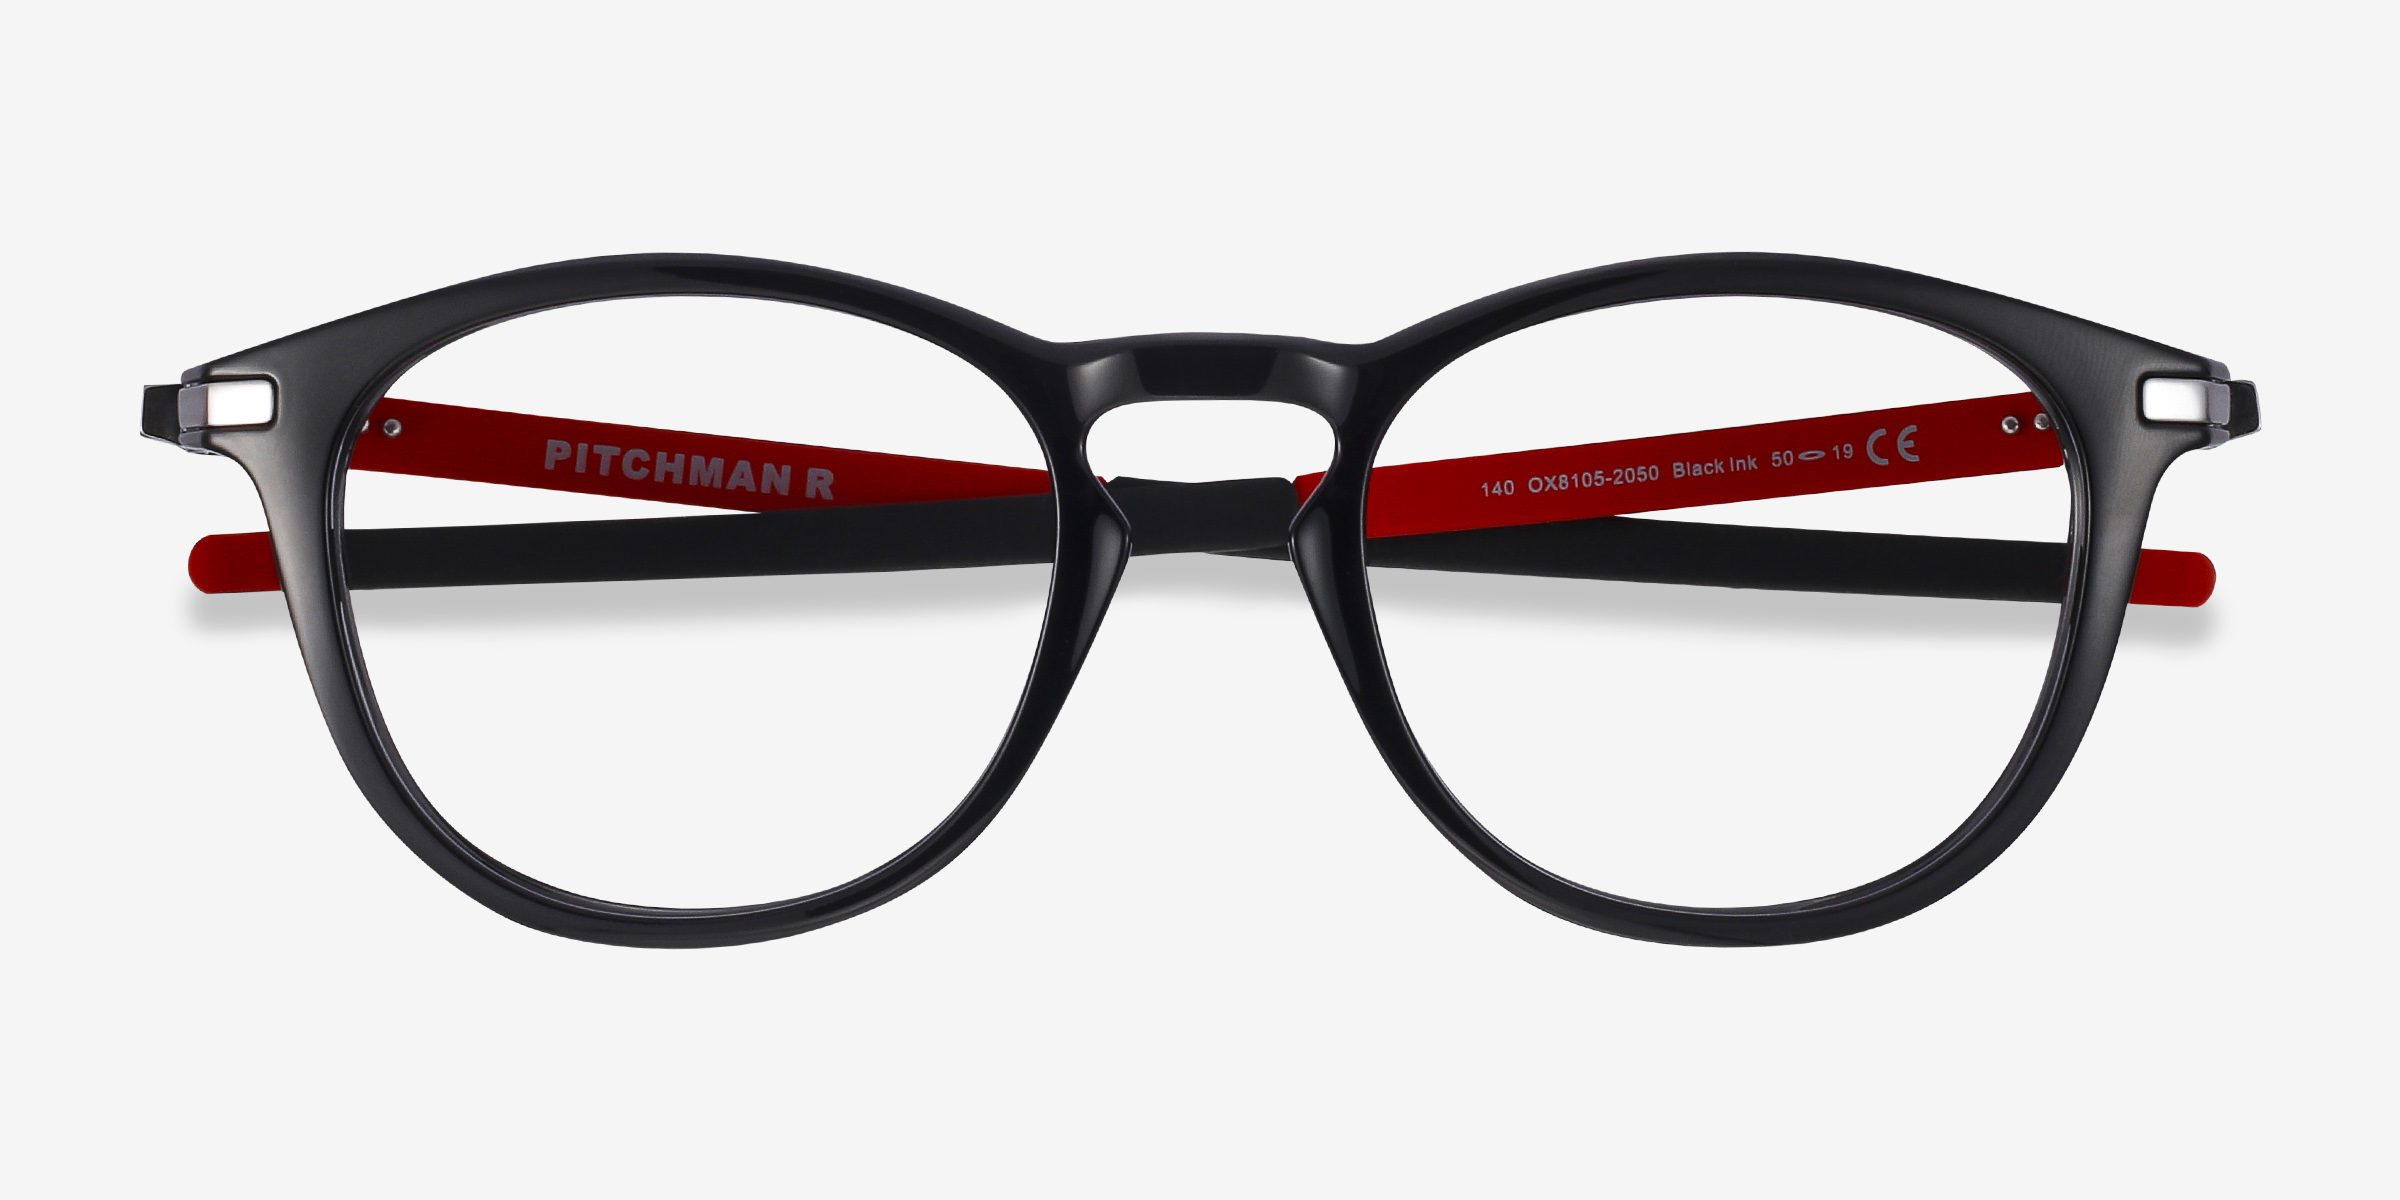 Oakley Pitchman R Round Black Ink Frame Glasses For Men Eyebuydirect Canada